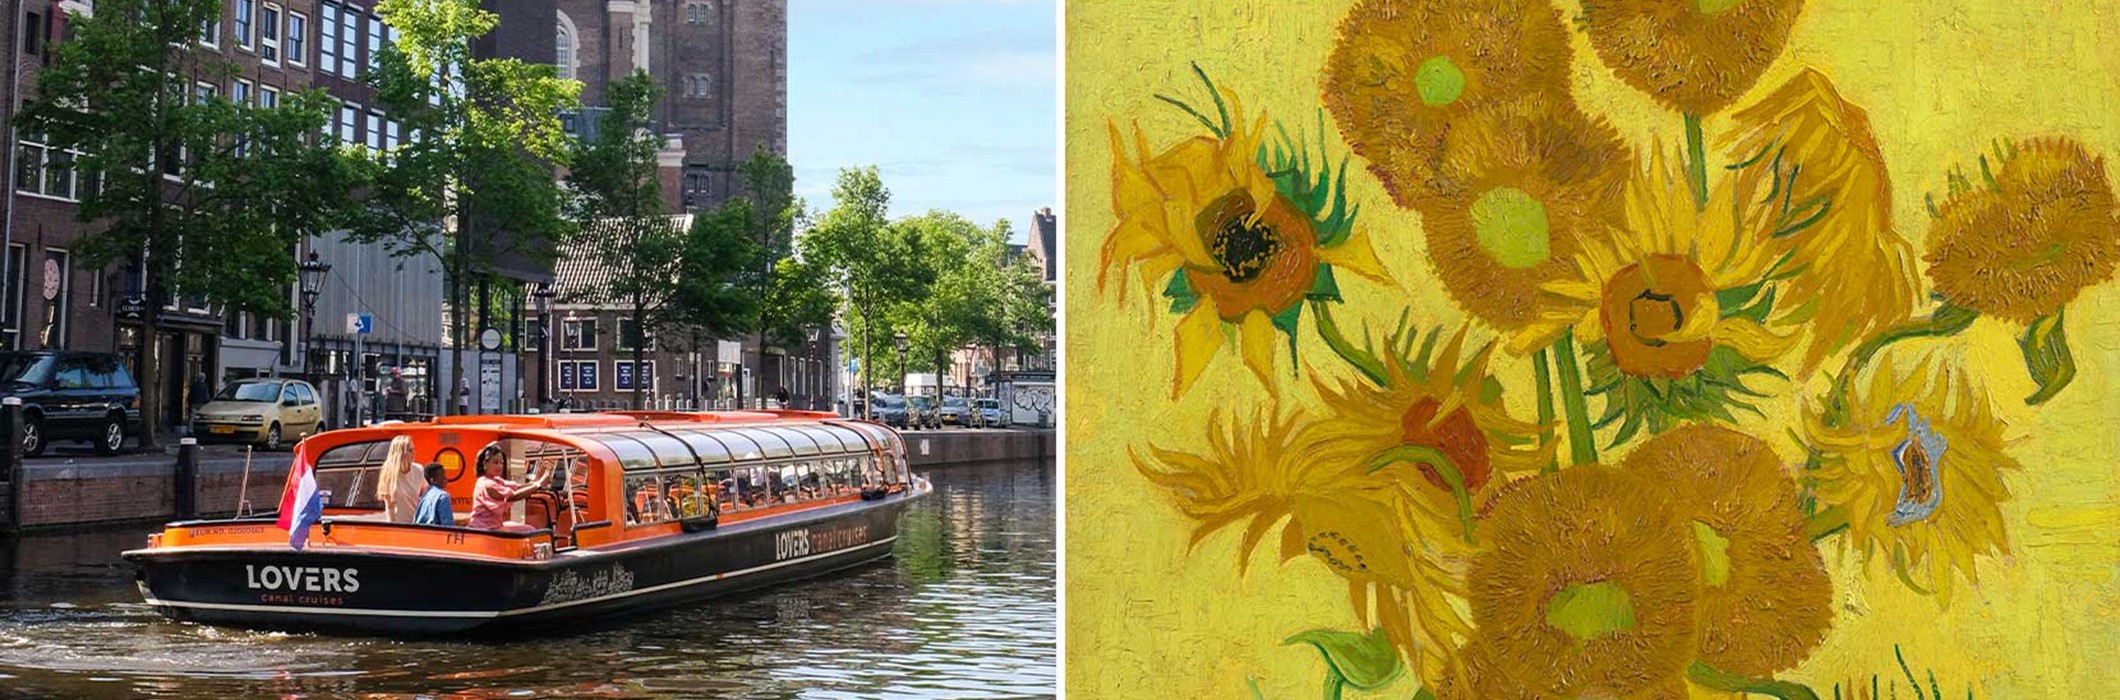 Van Gogh Museum + Amsterdam Canal Cruise